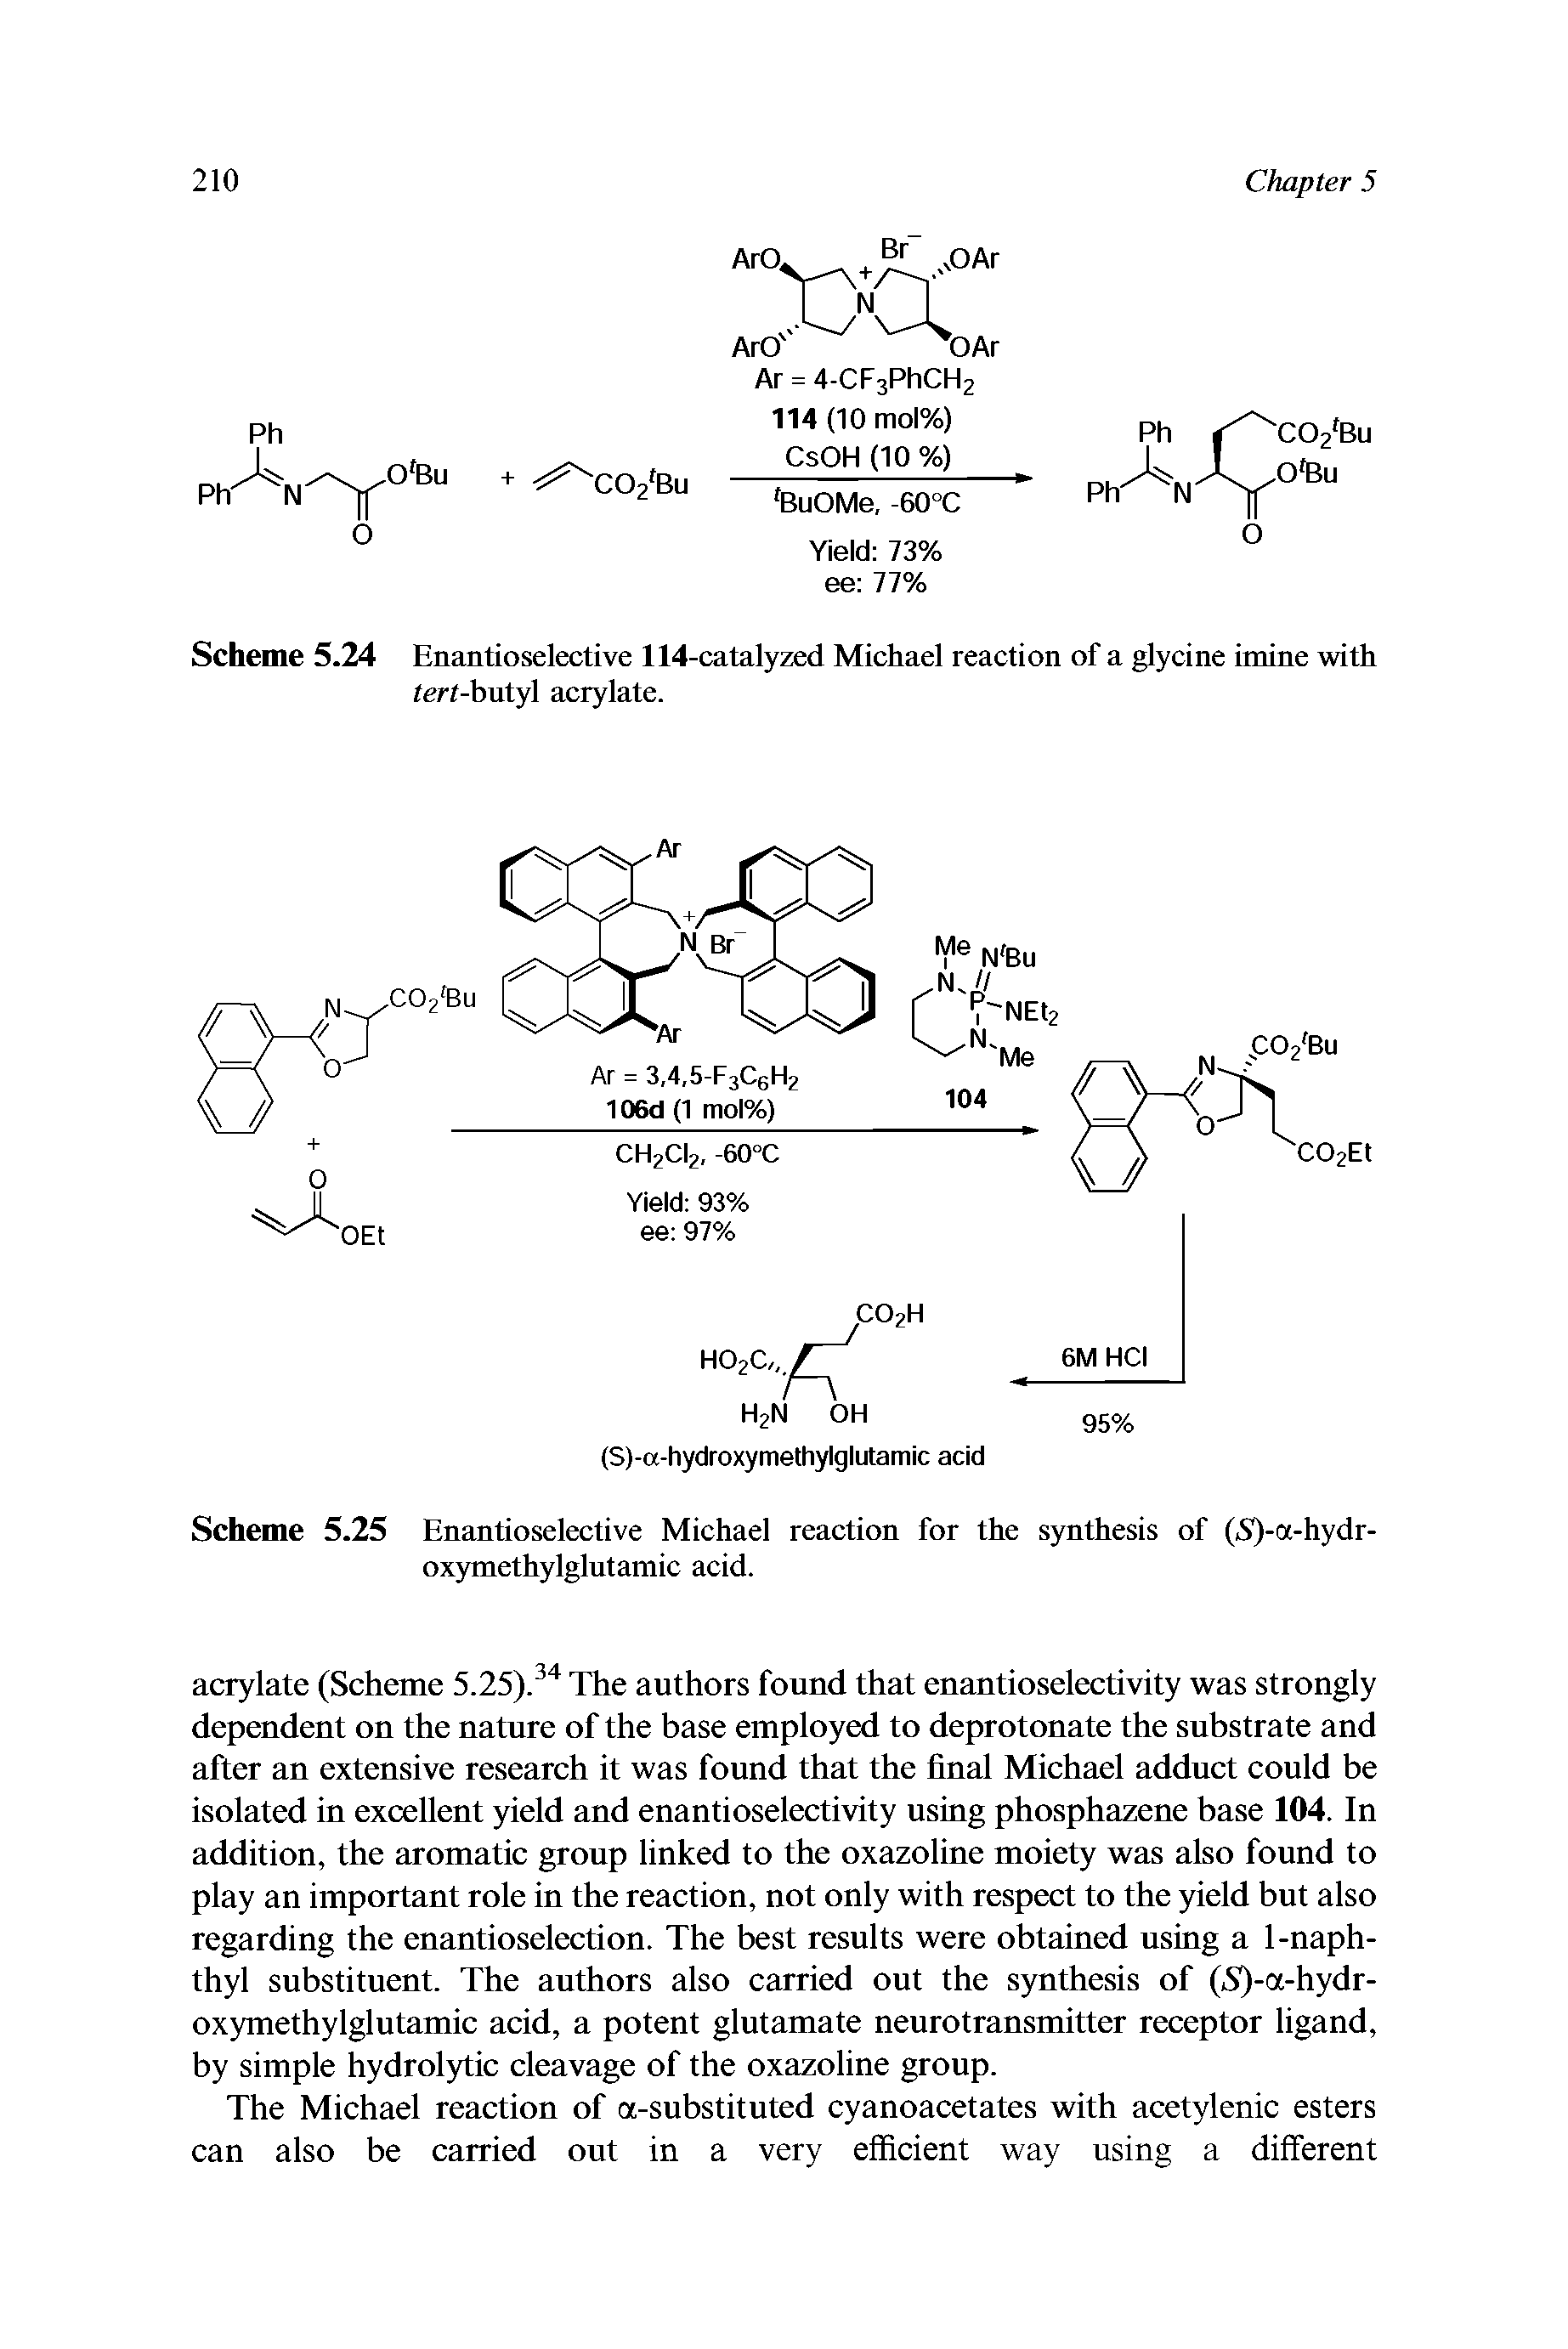 Scheme 5.24 Enantioselective 114-catalyzed Michael reaction of a glycine imine with tert-butyl acrylate.